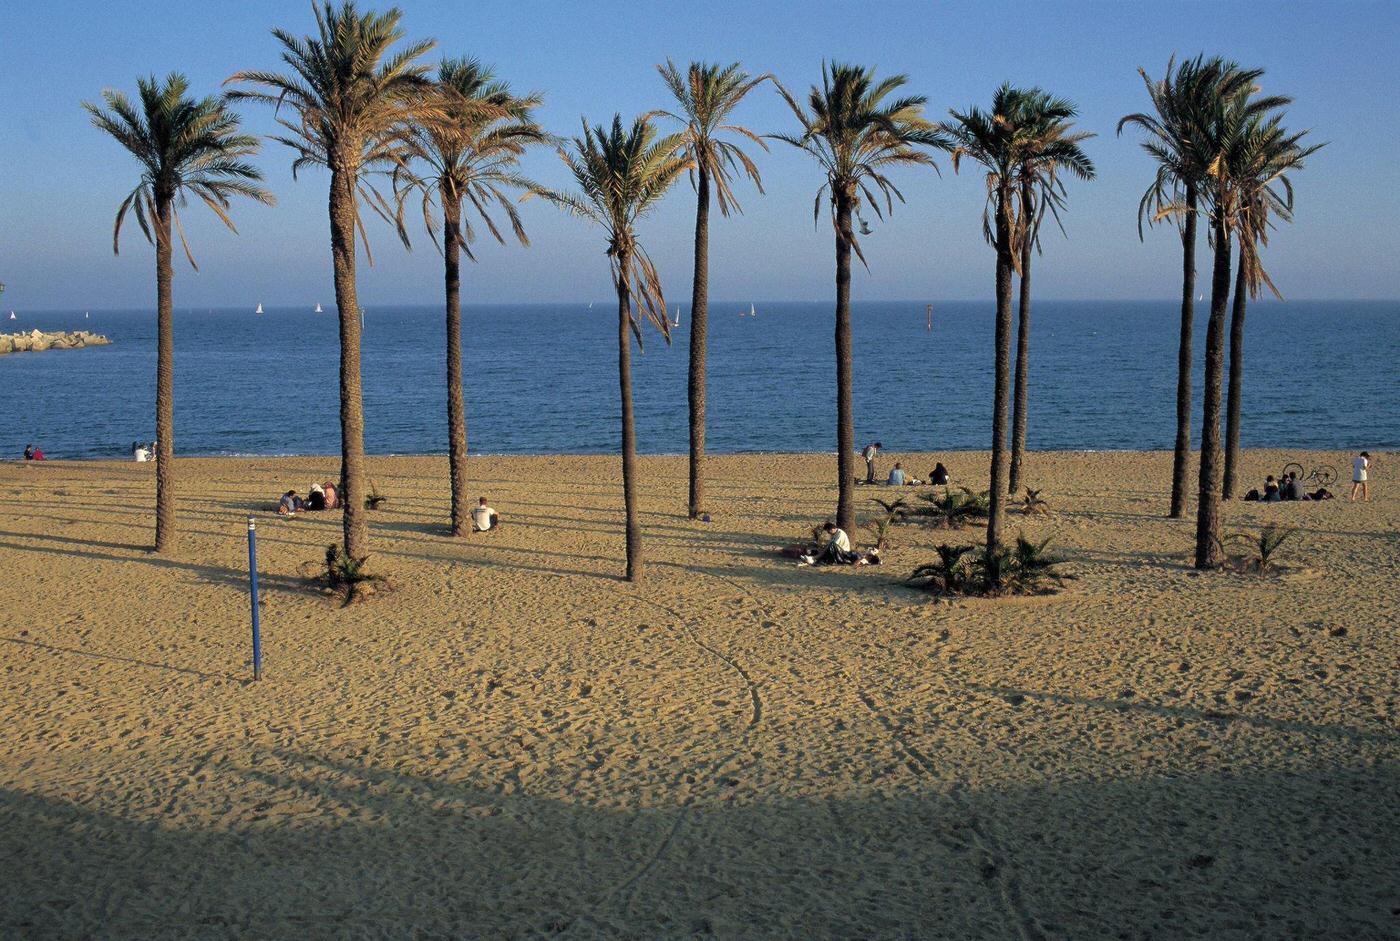 Beach of Barcelona People taking sunbaths in a beach of Barcelona